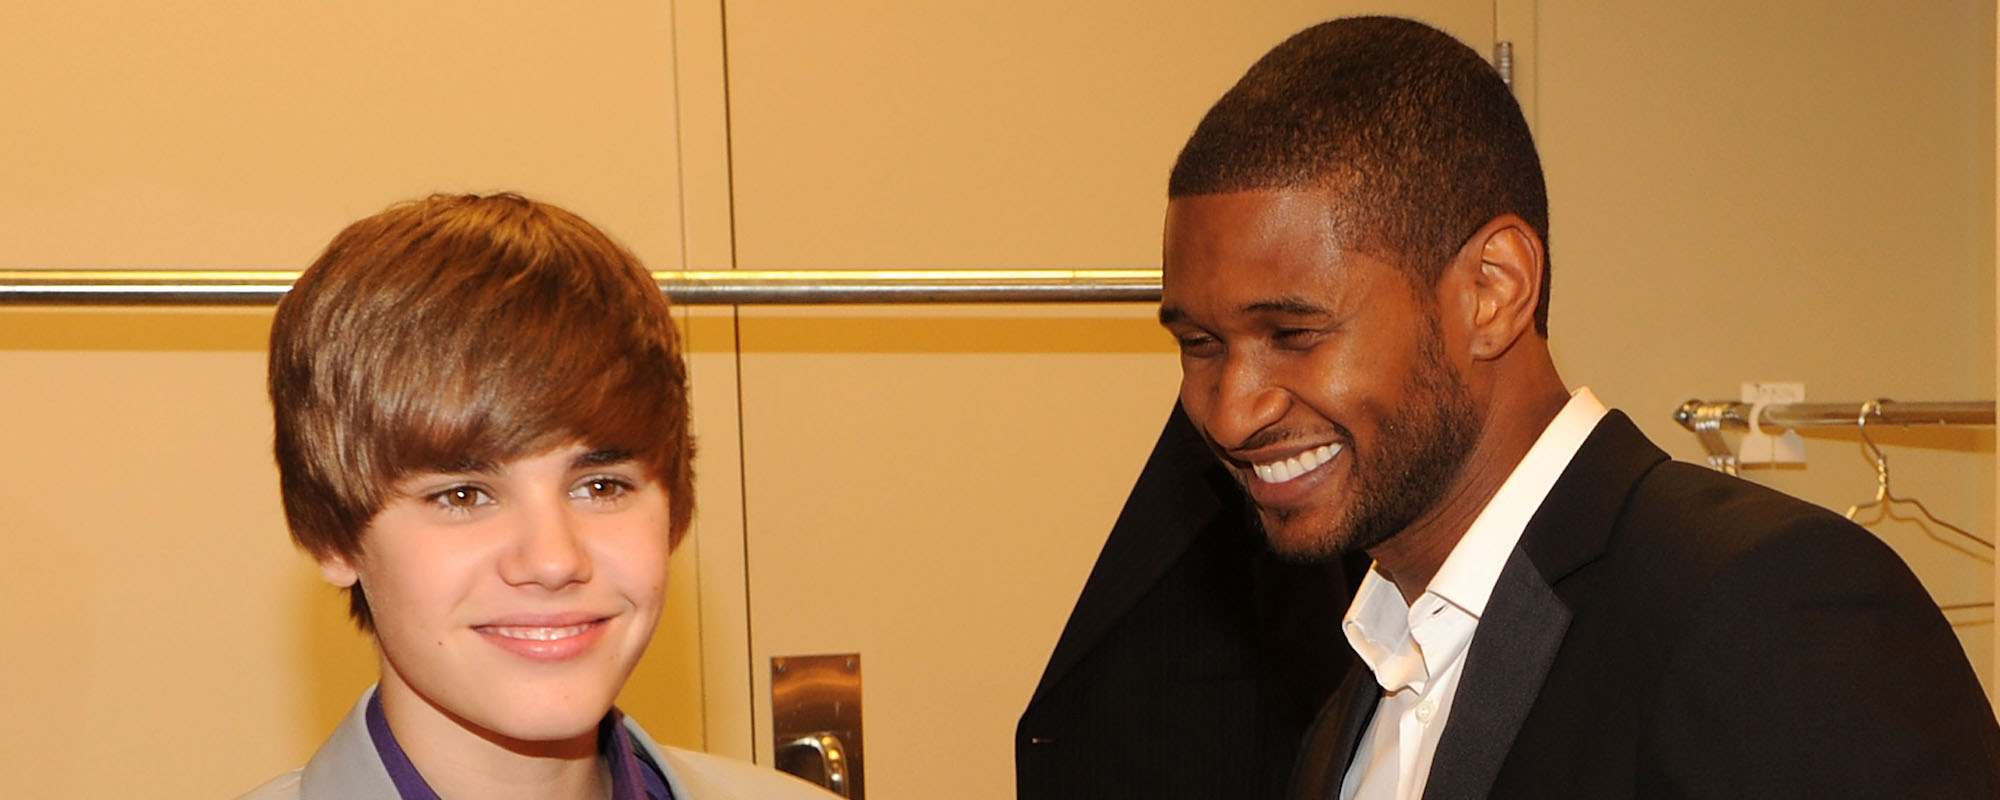 The sad reason Justin Bieber rejected Usher's Super Bowl invitation 